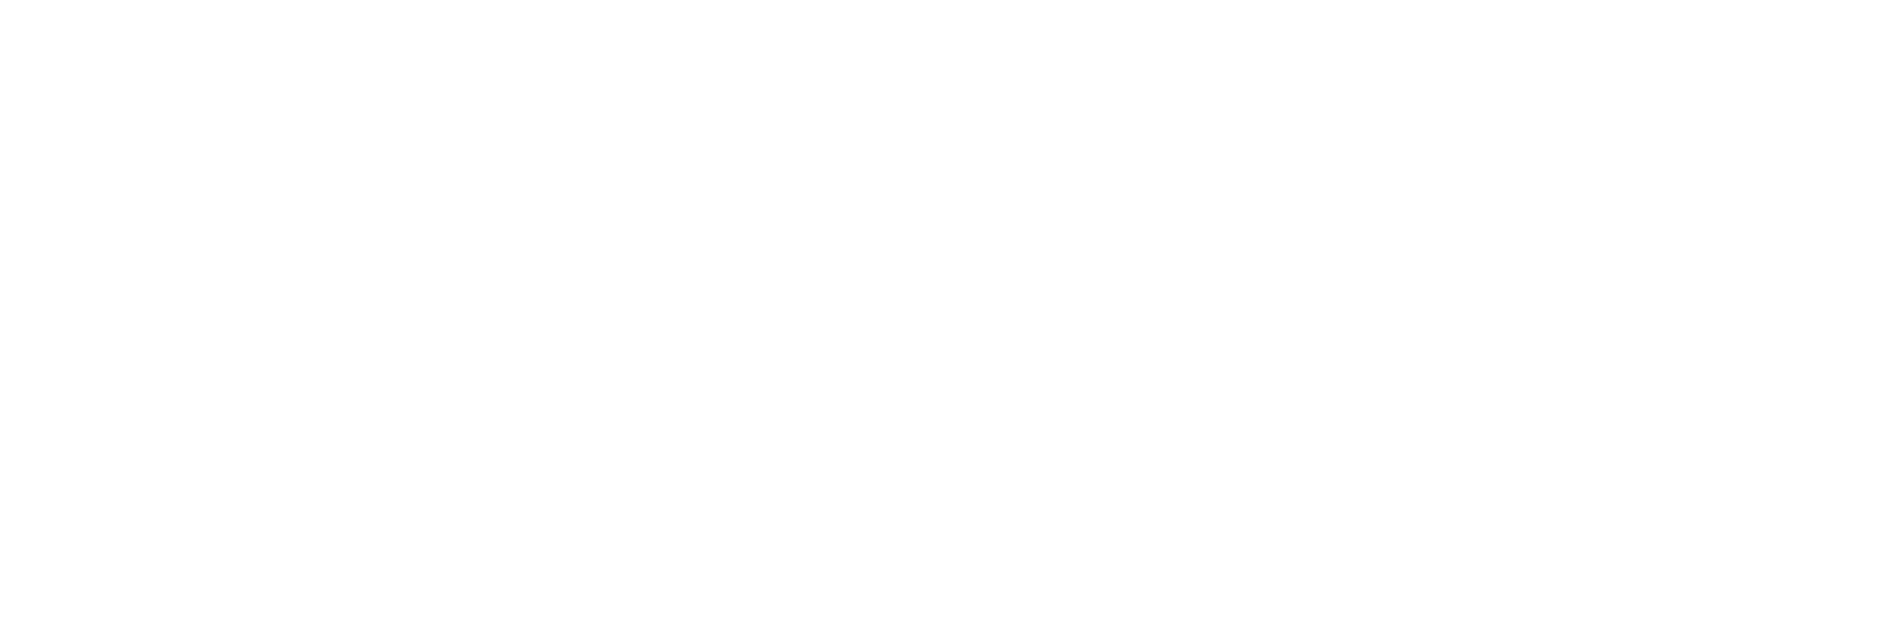 The Funky Red Pandas logo